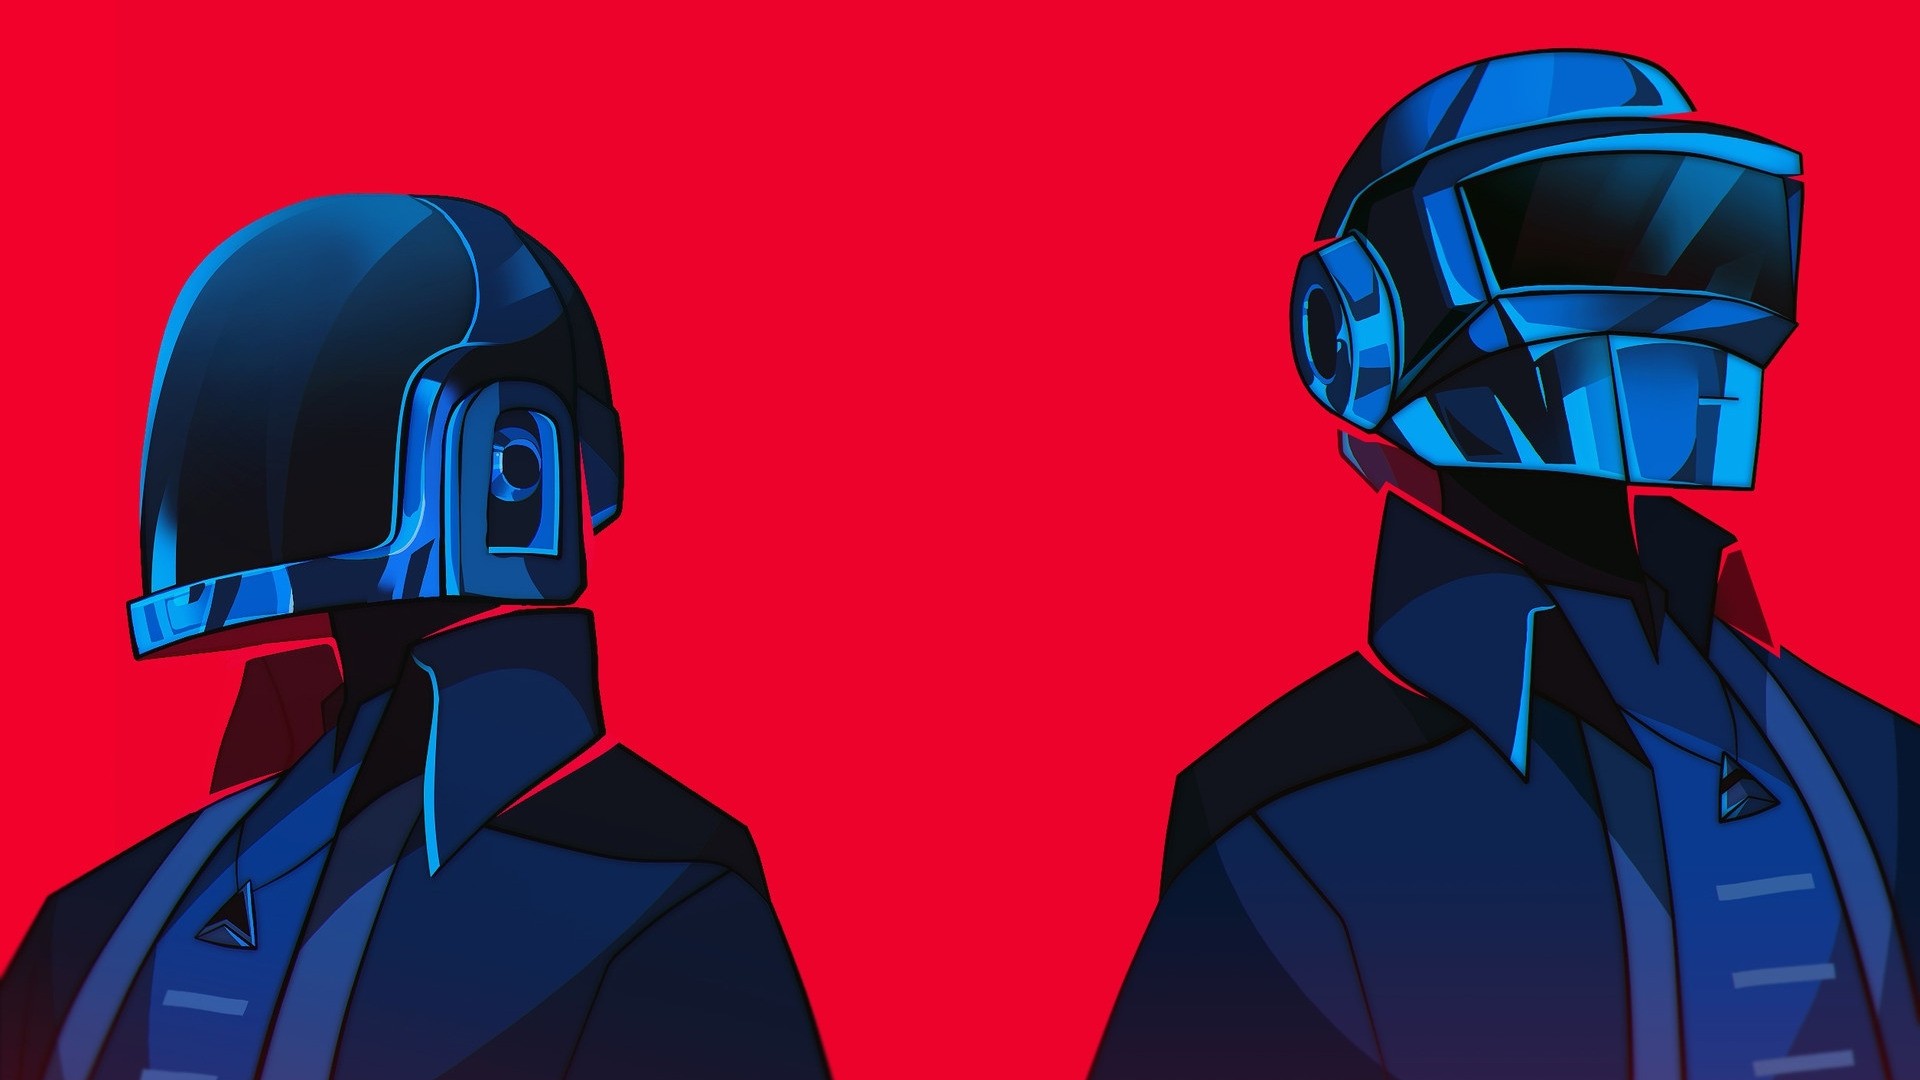 Daft Punk hd wallpaper download